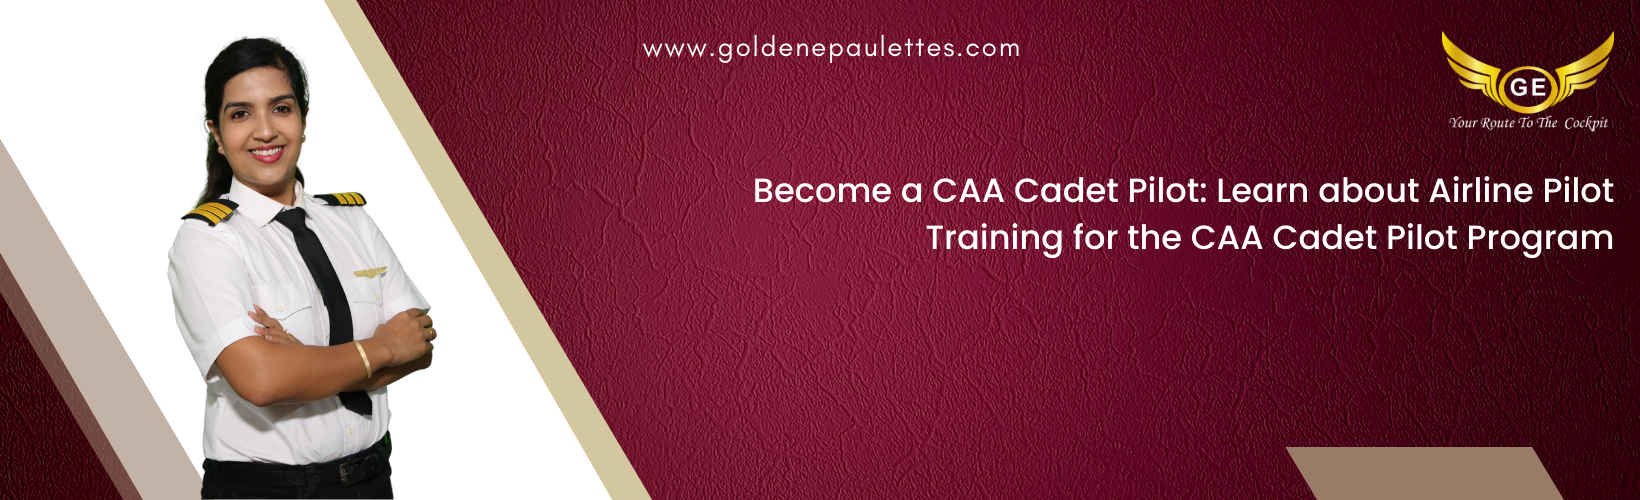 Airline Pilot Training for the CAA Cadet Pilot Program